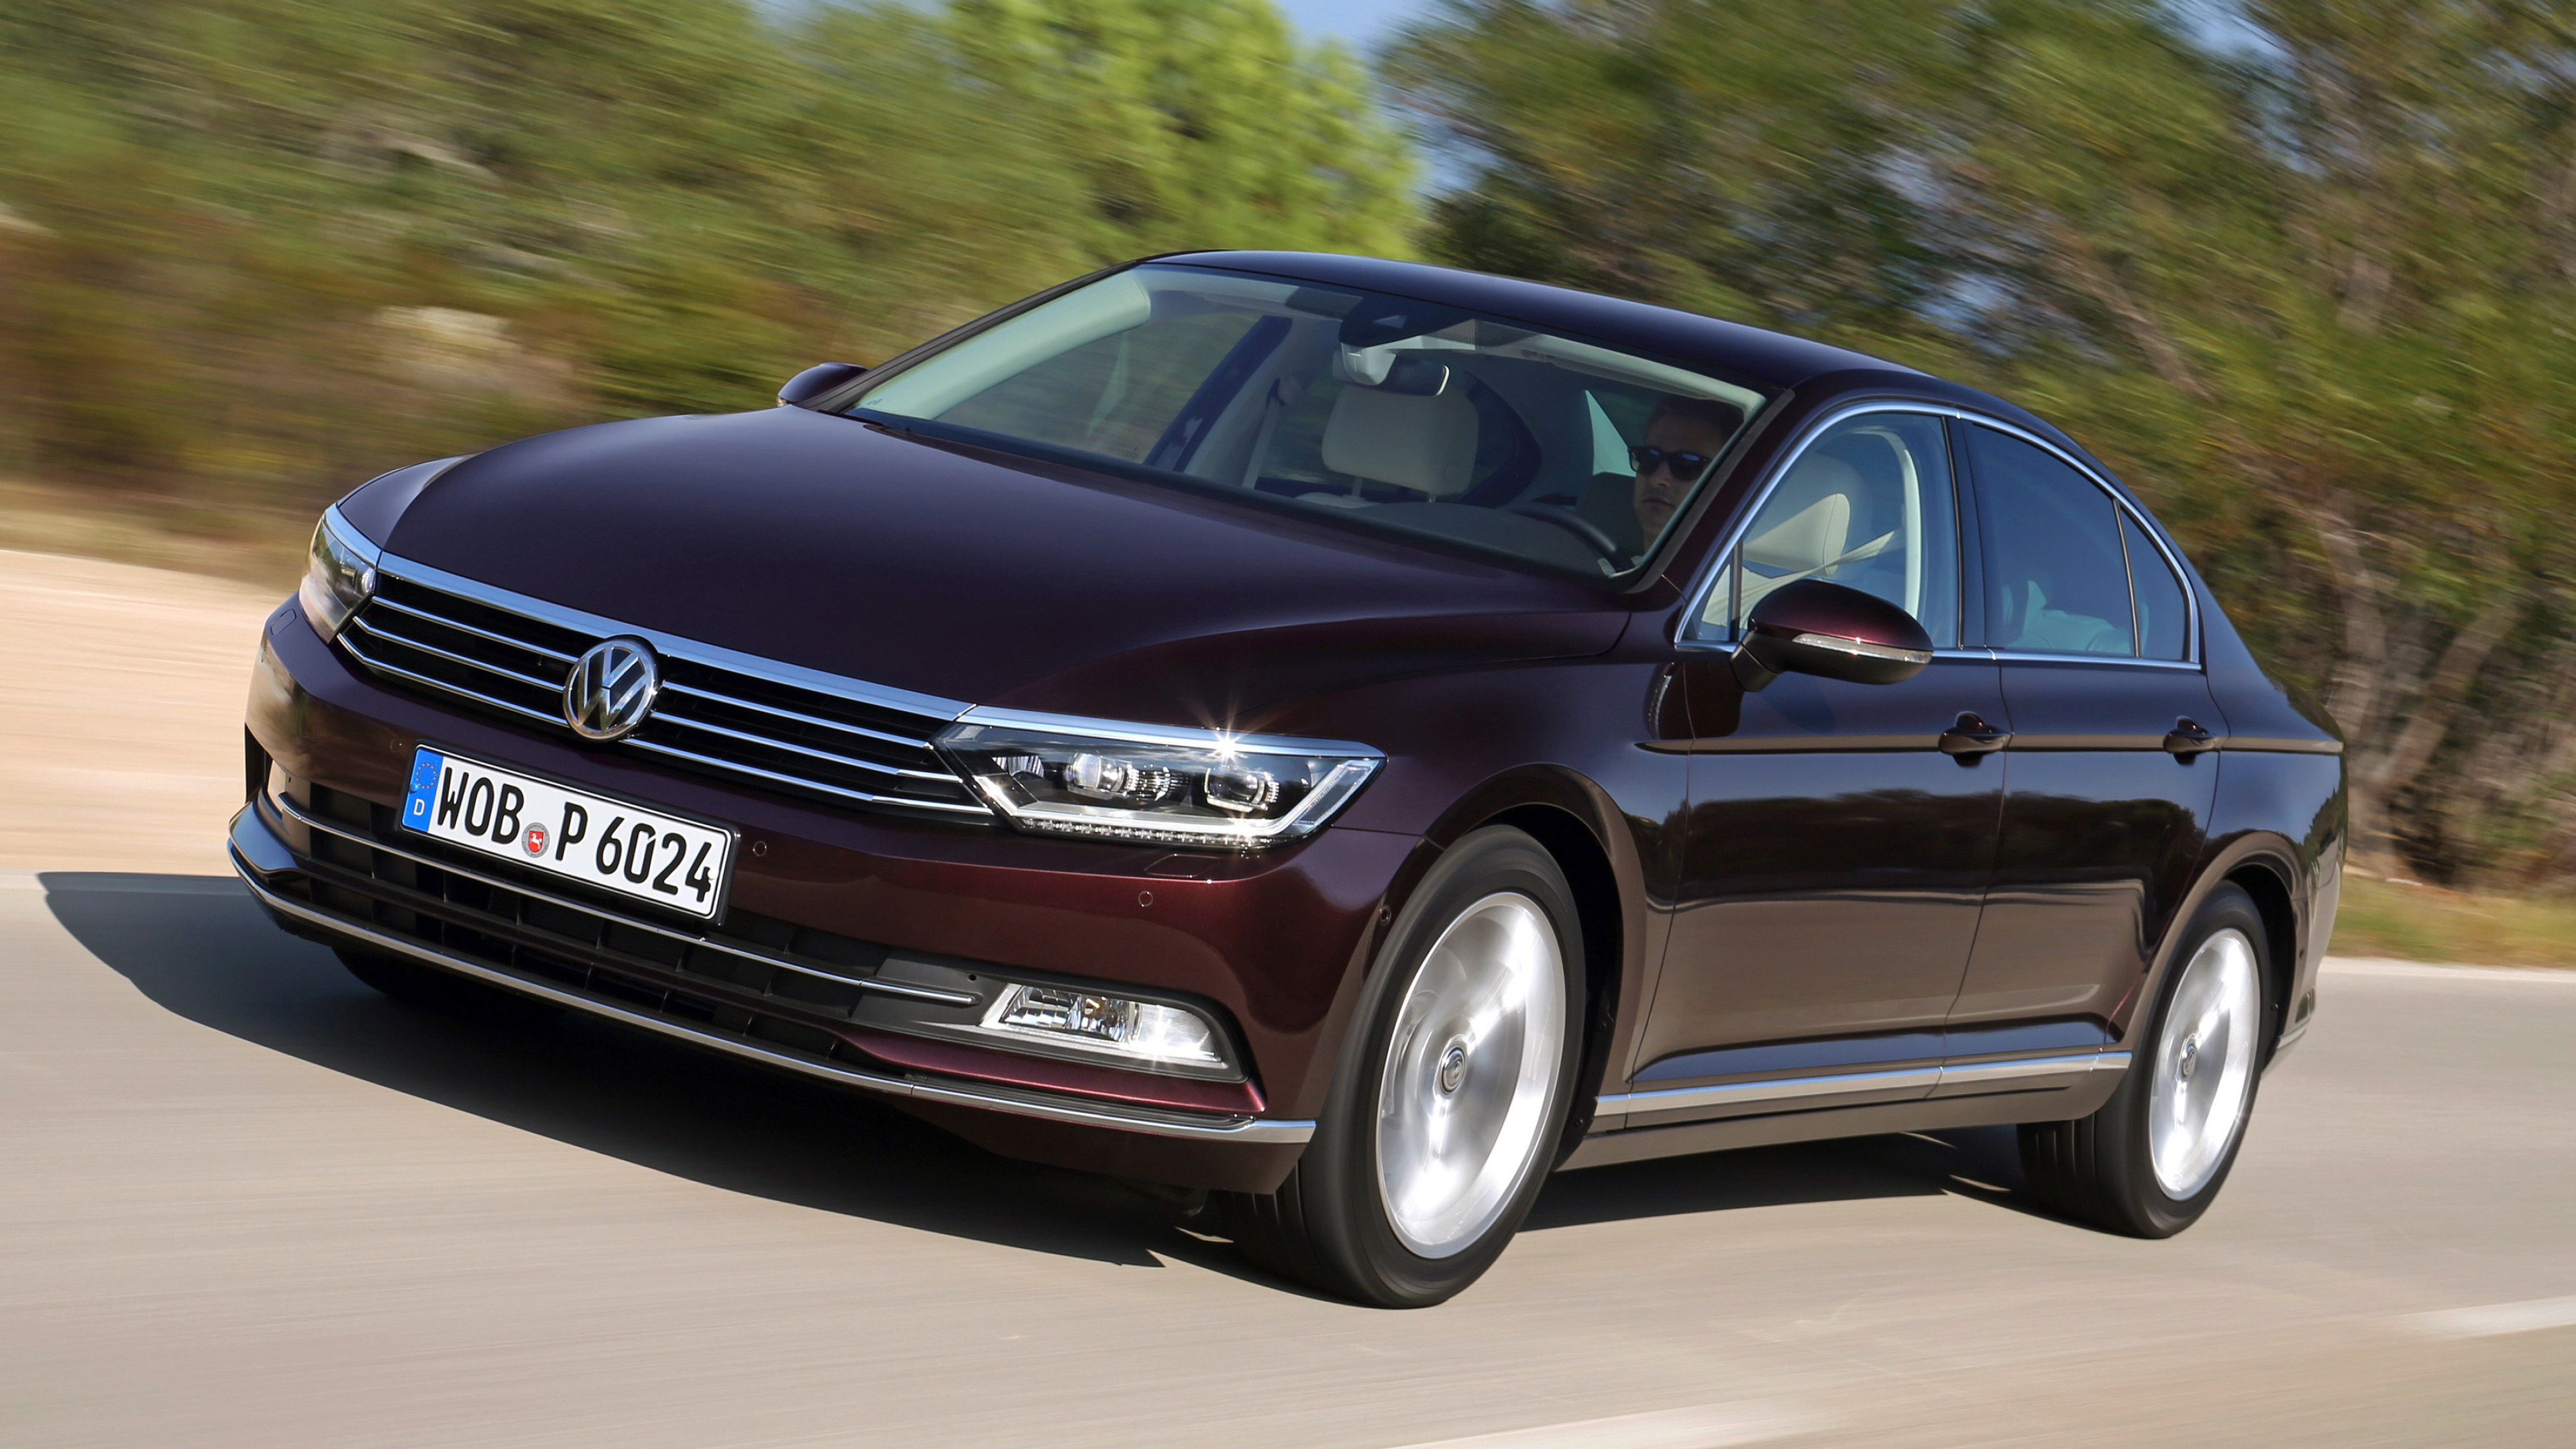 Volkswagen Passat, Highline edition, 2014 model, Automotive excellence, 3840x2160 4K Desktop